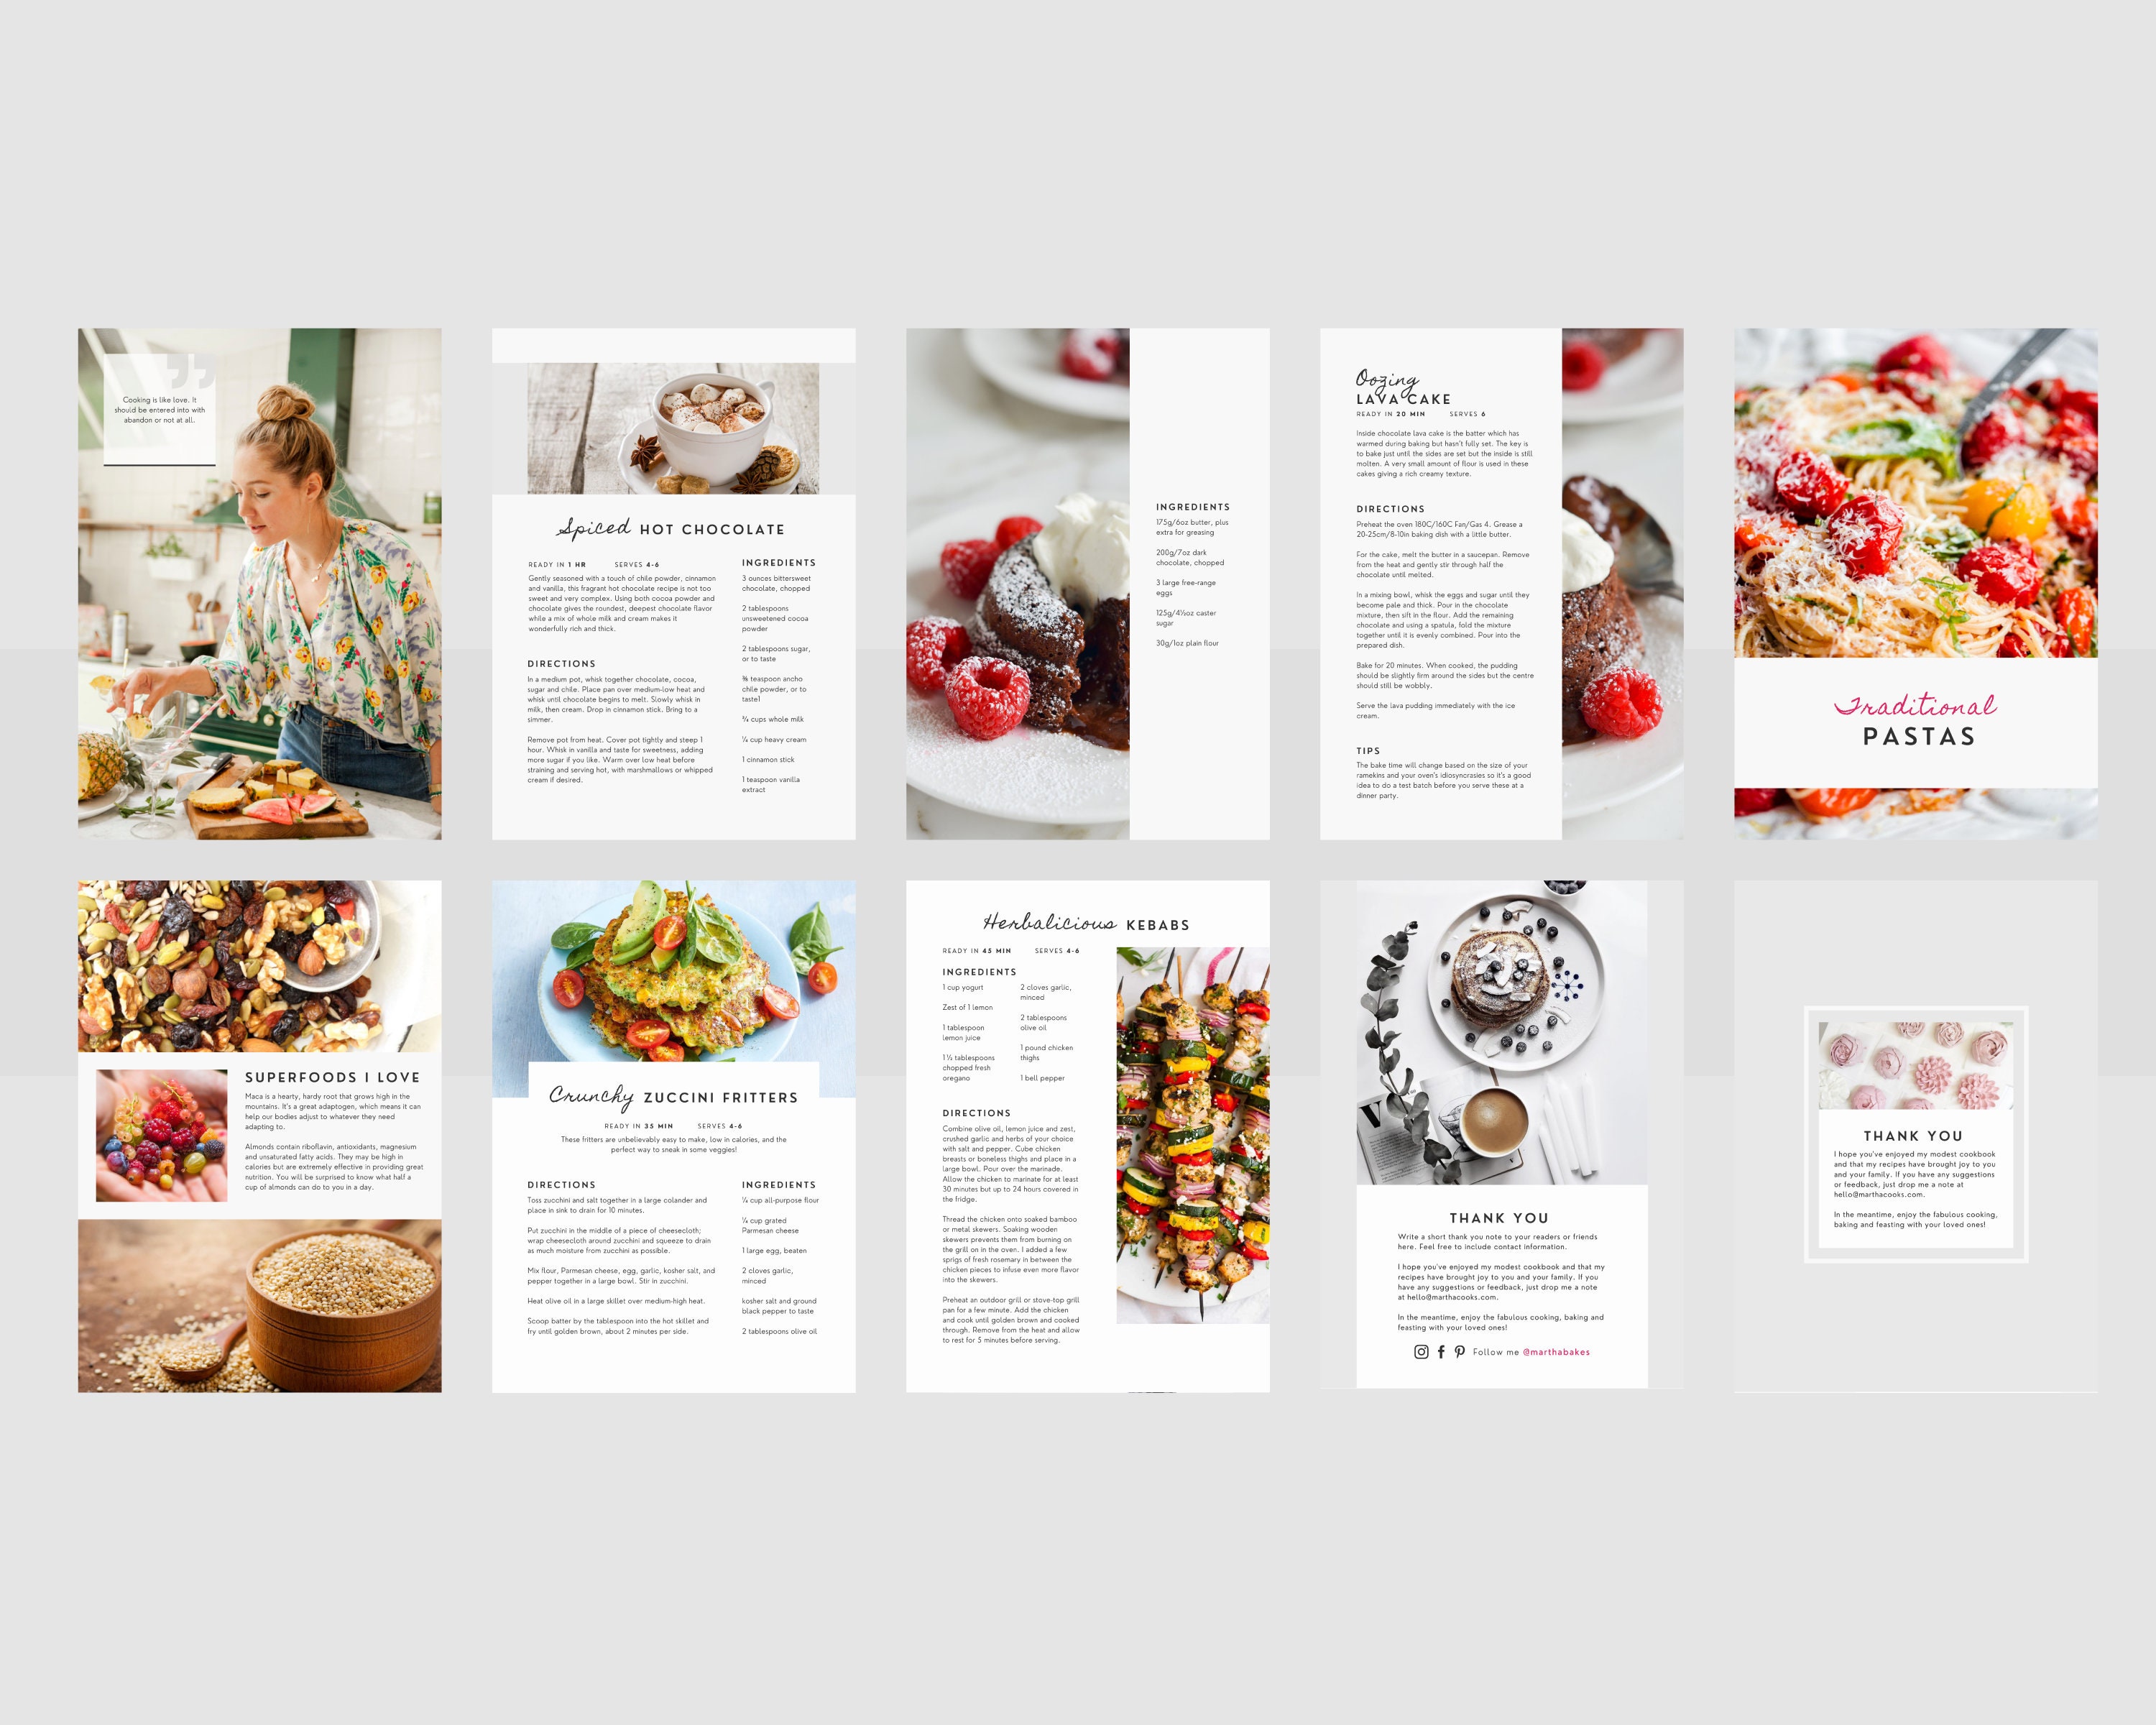 Recipe Book Template Cookbook, Minimal Clean White, Editable